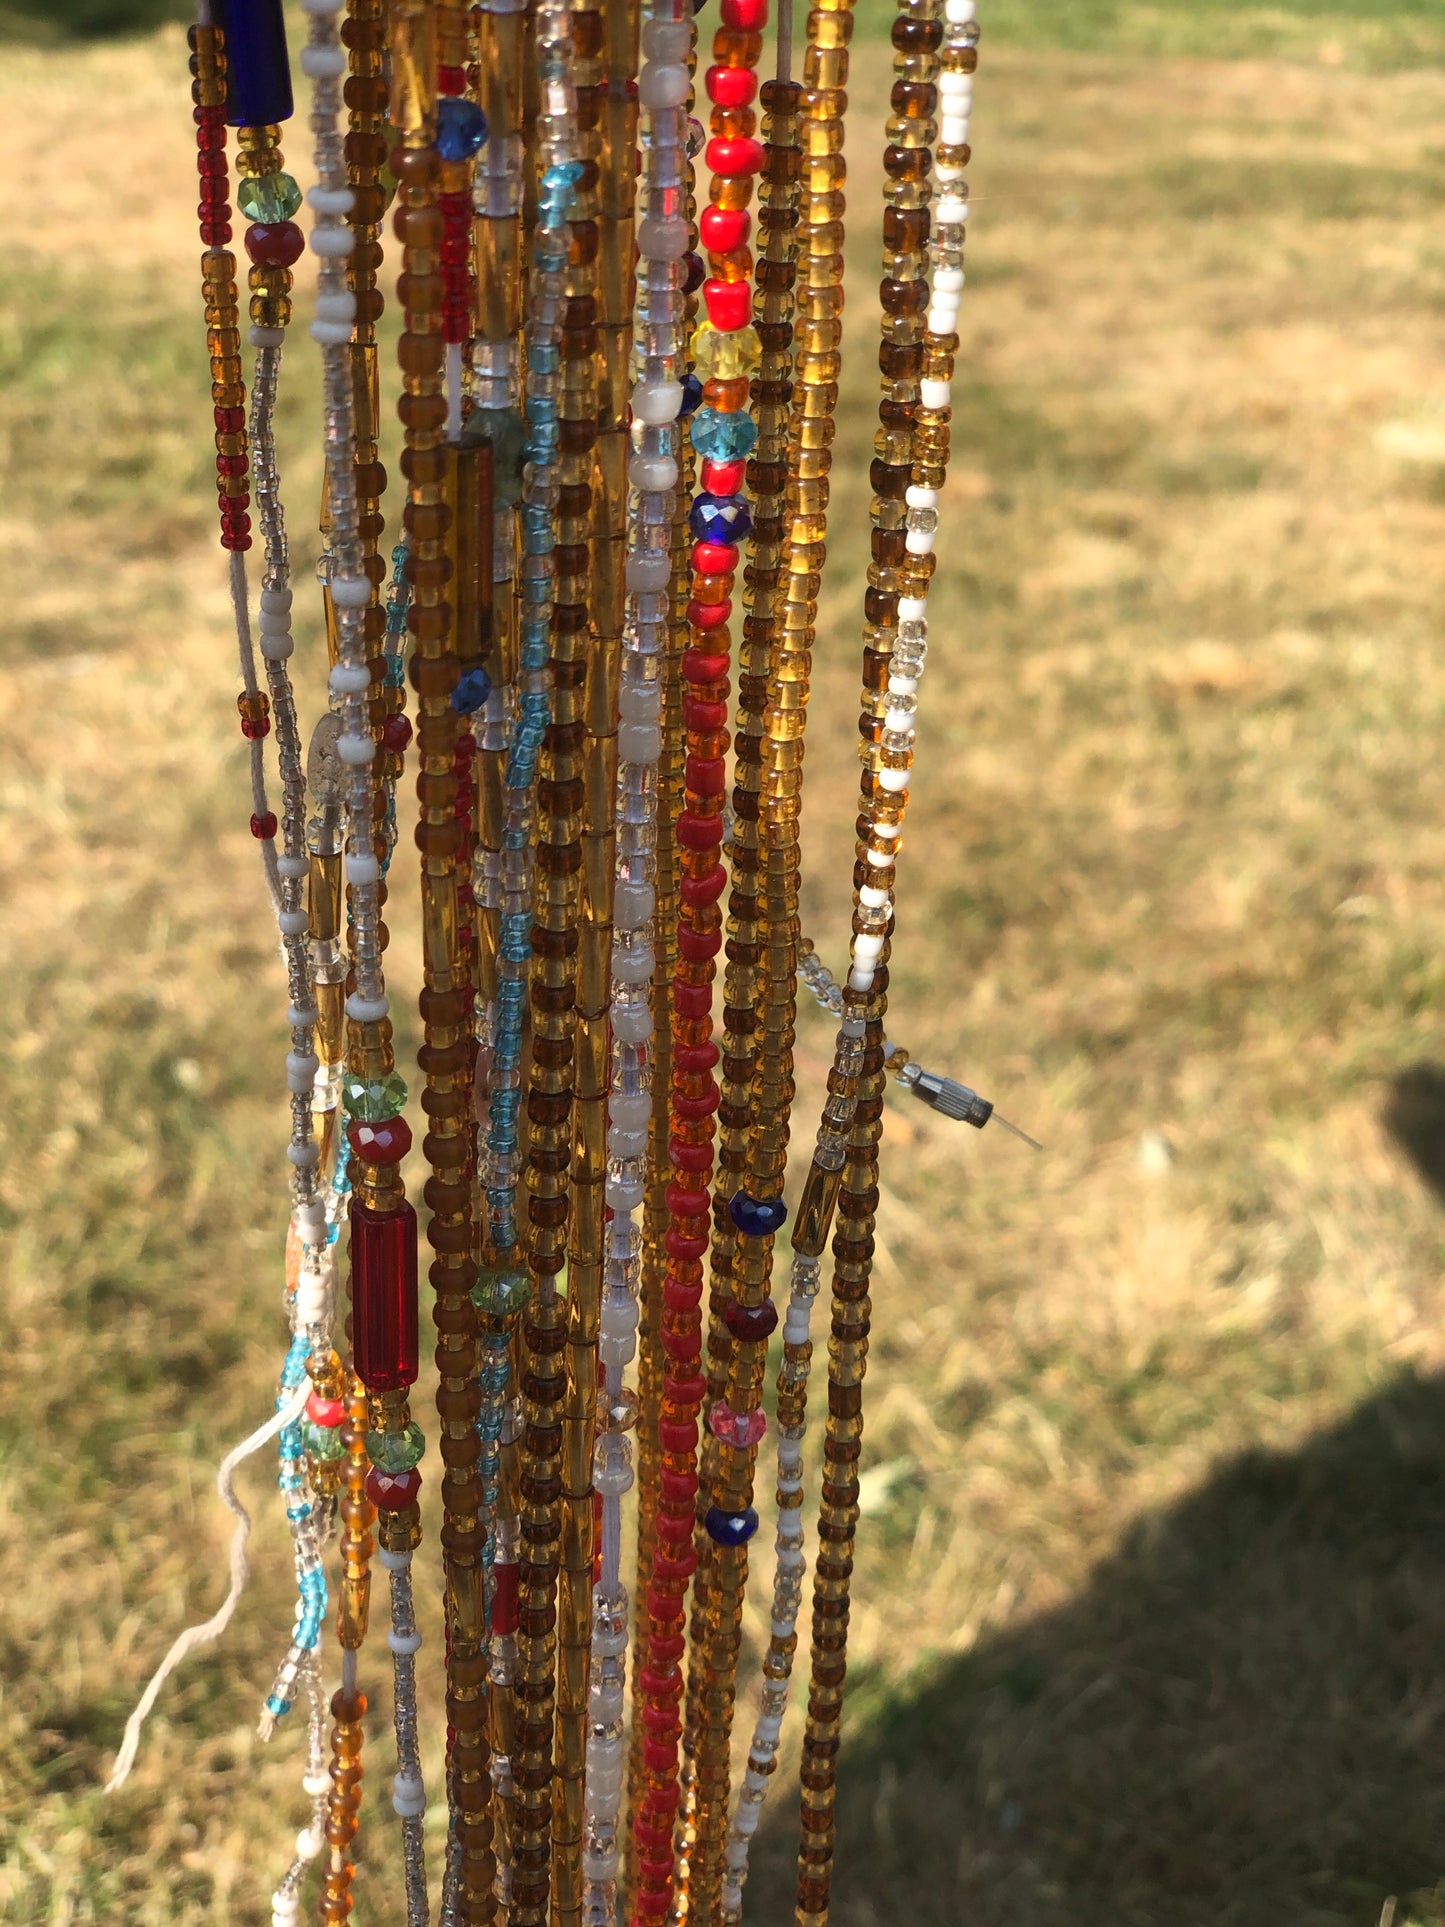 Waist beads x 1 - colour varies